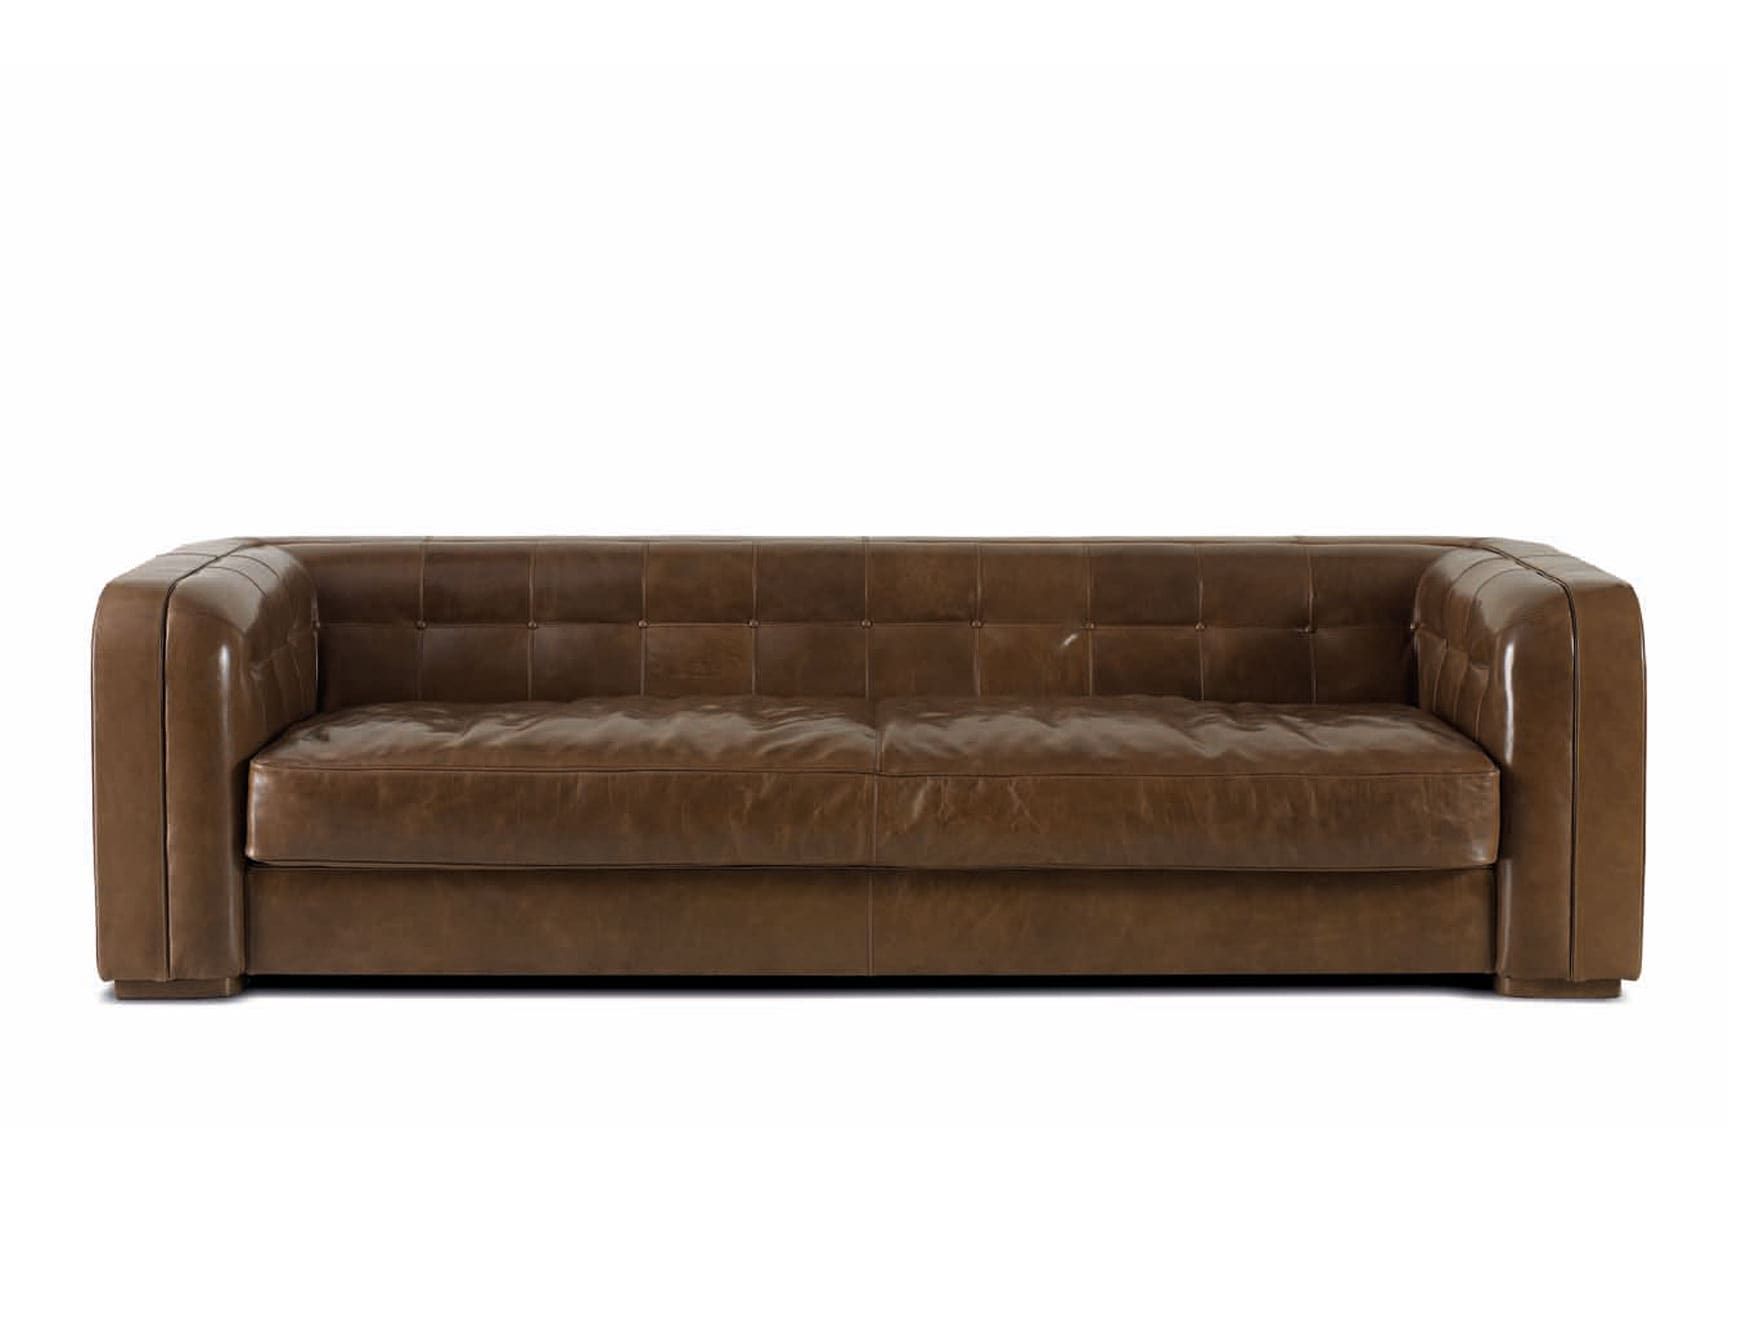 Jonny modern Italian sofa chair with brown leather